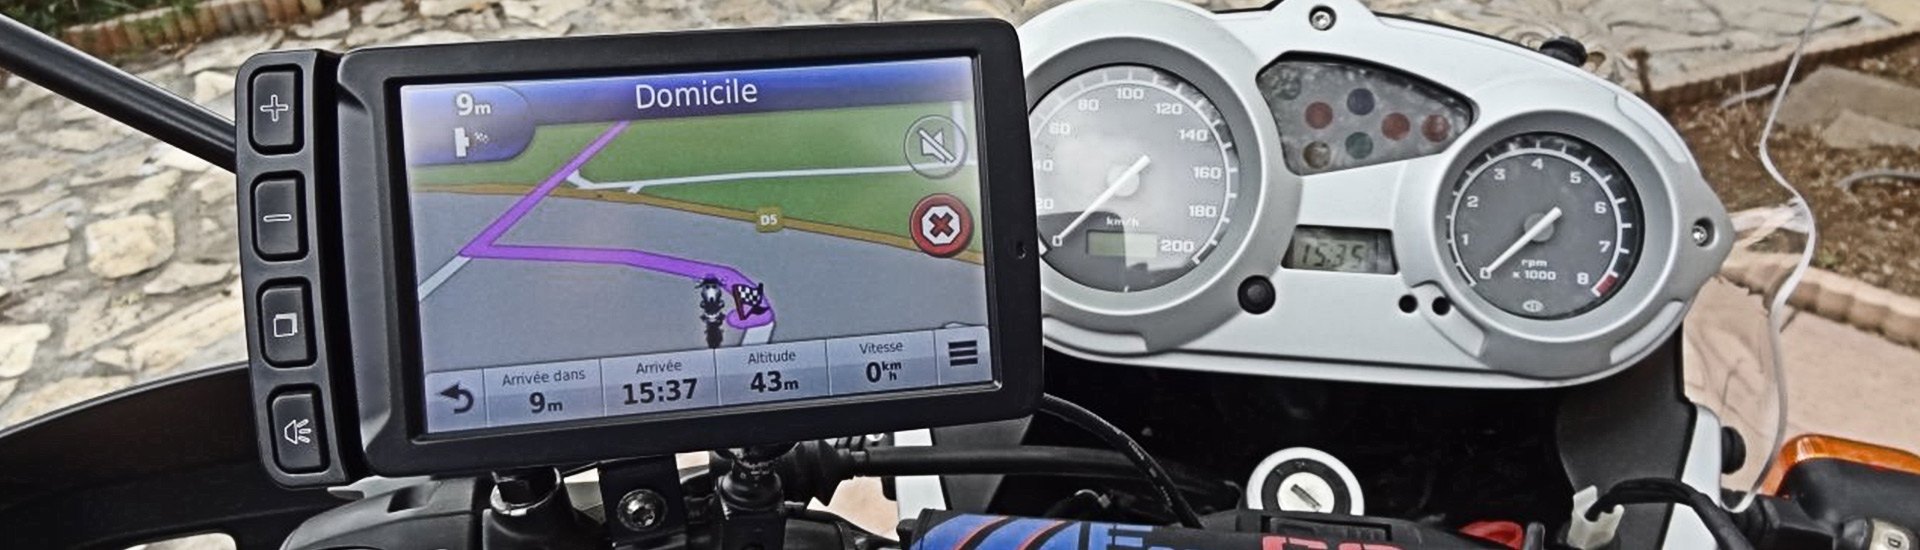 Universal Motorcycle GPS & Navigation